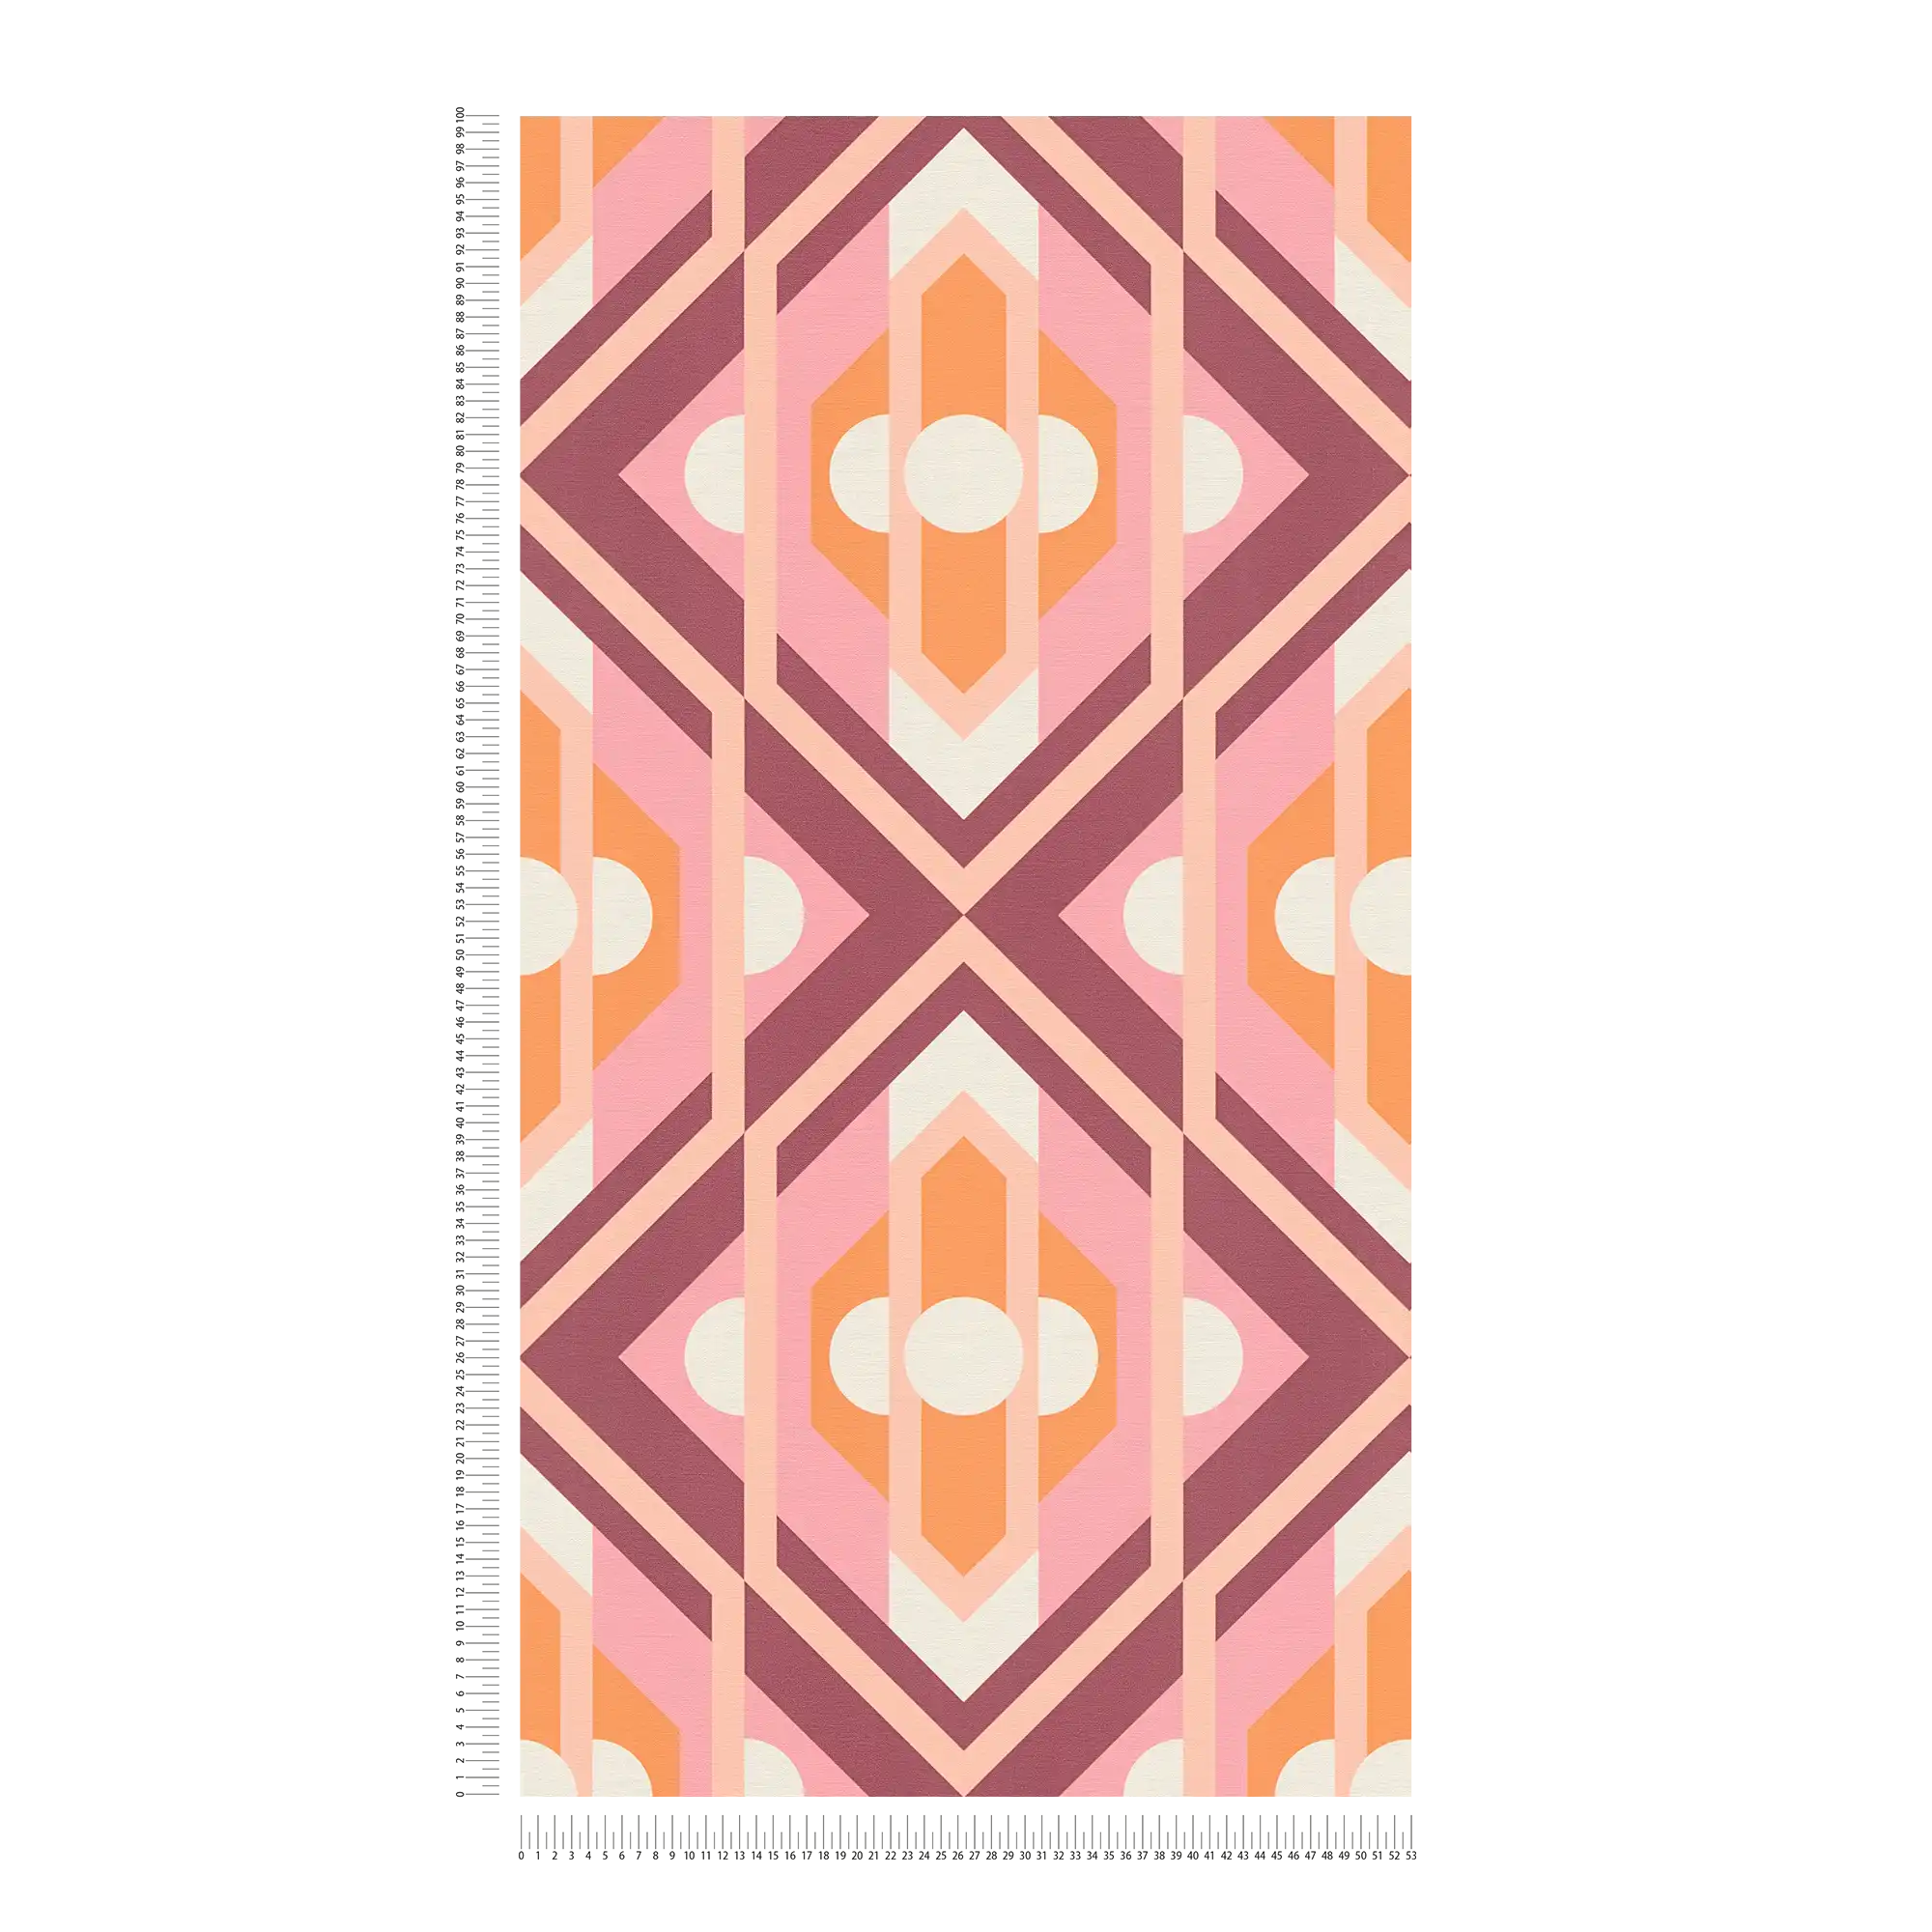             Non-woven wallpaper with geometric ornaments in retro style - orange, pink, white
        